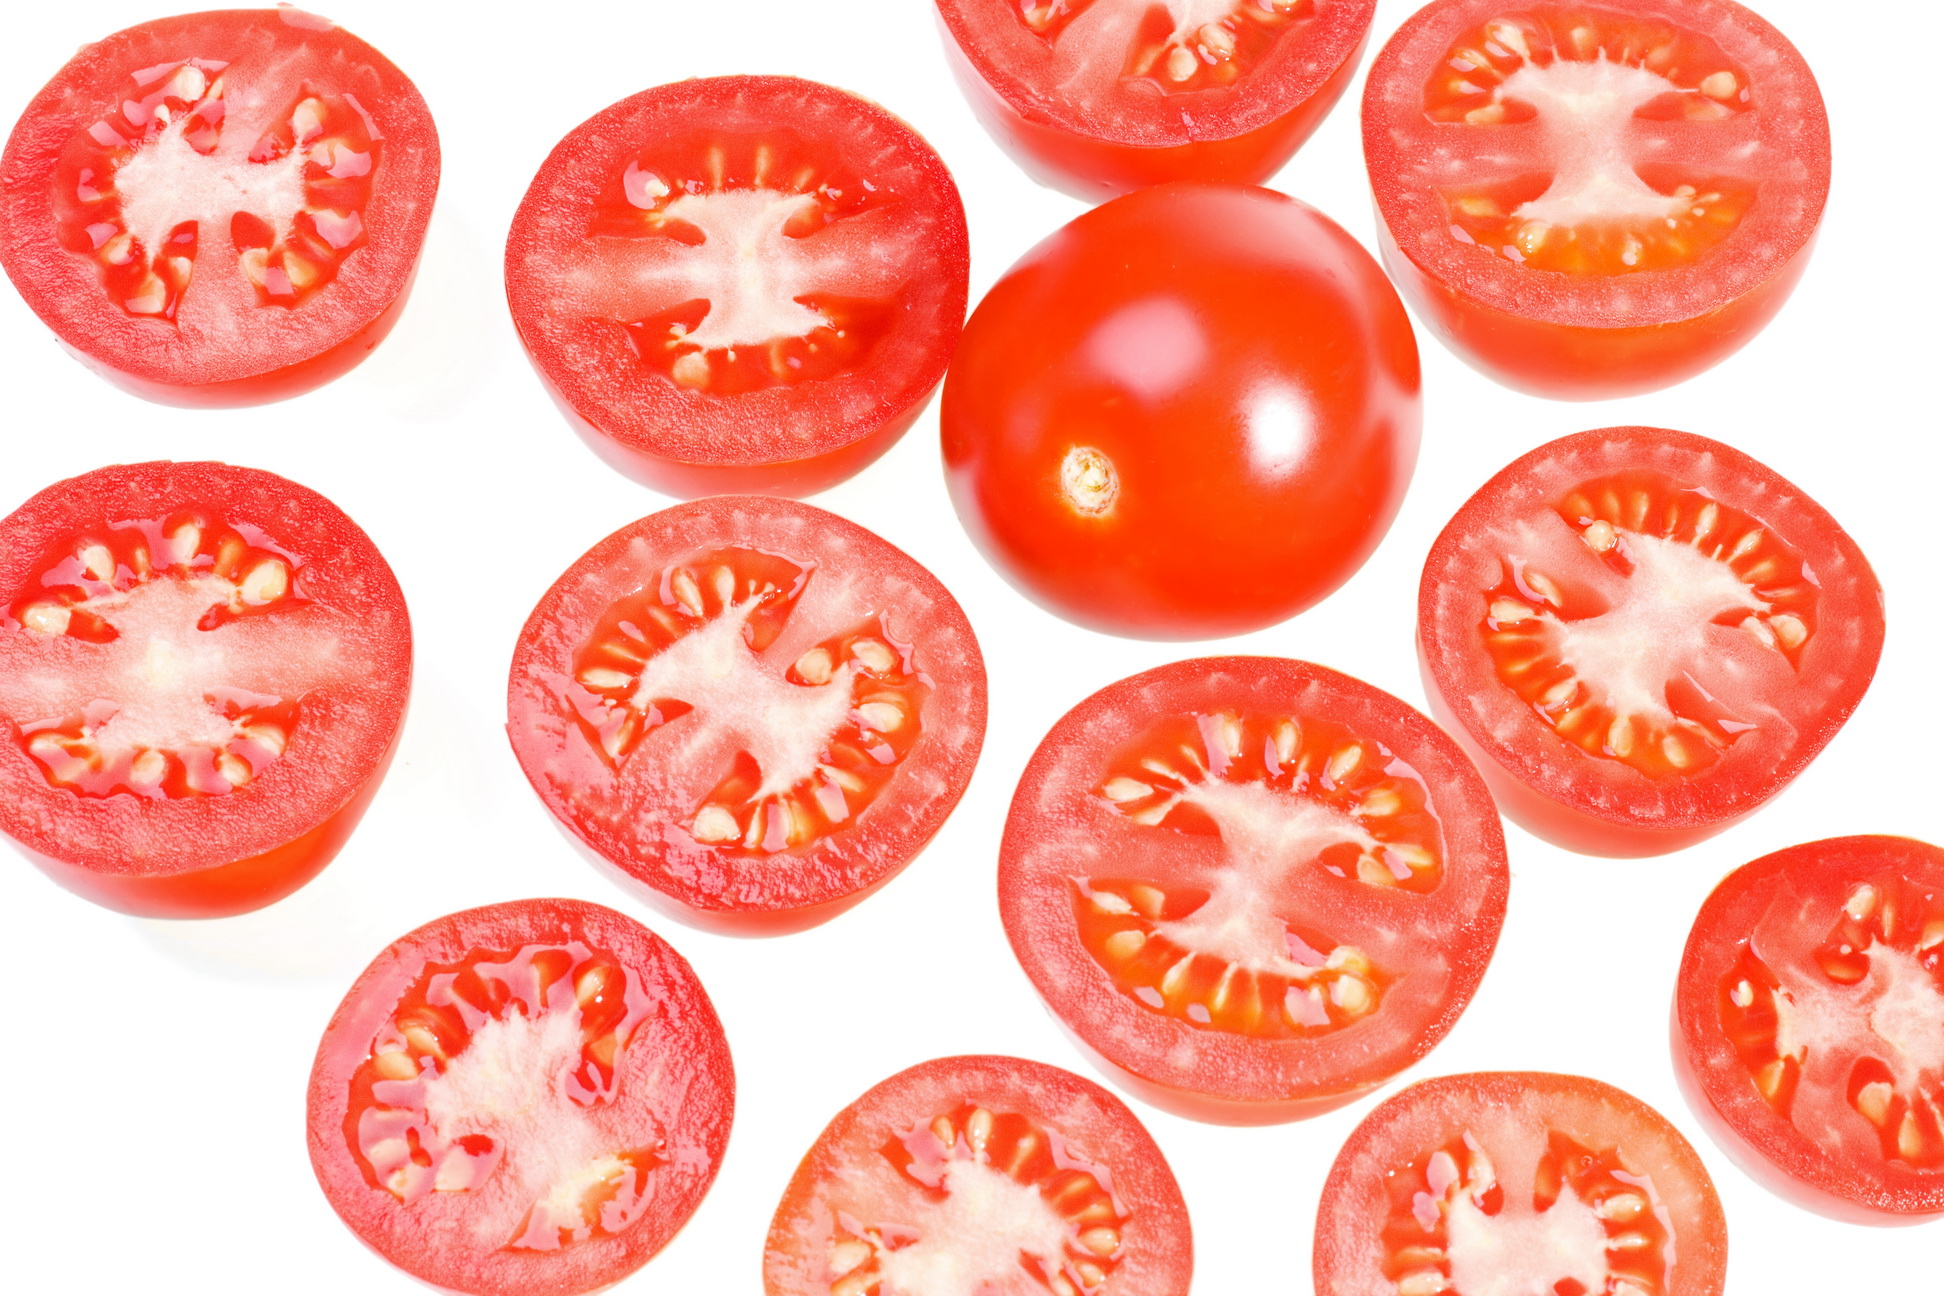 Cherry tomatoes photo